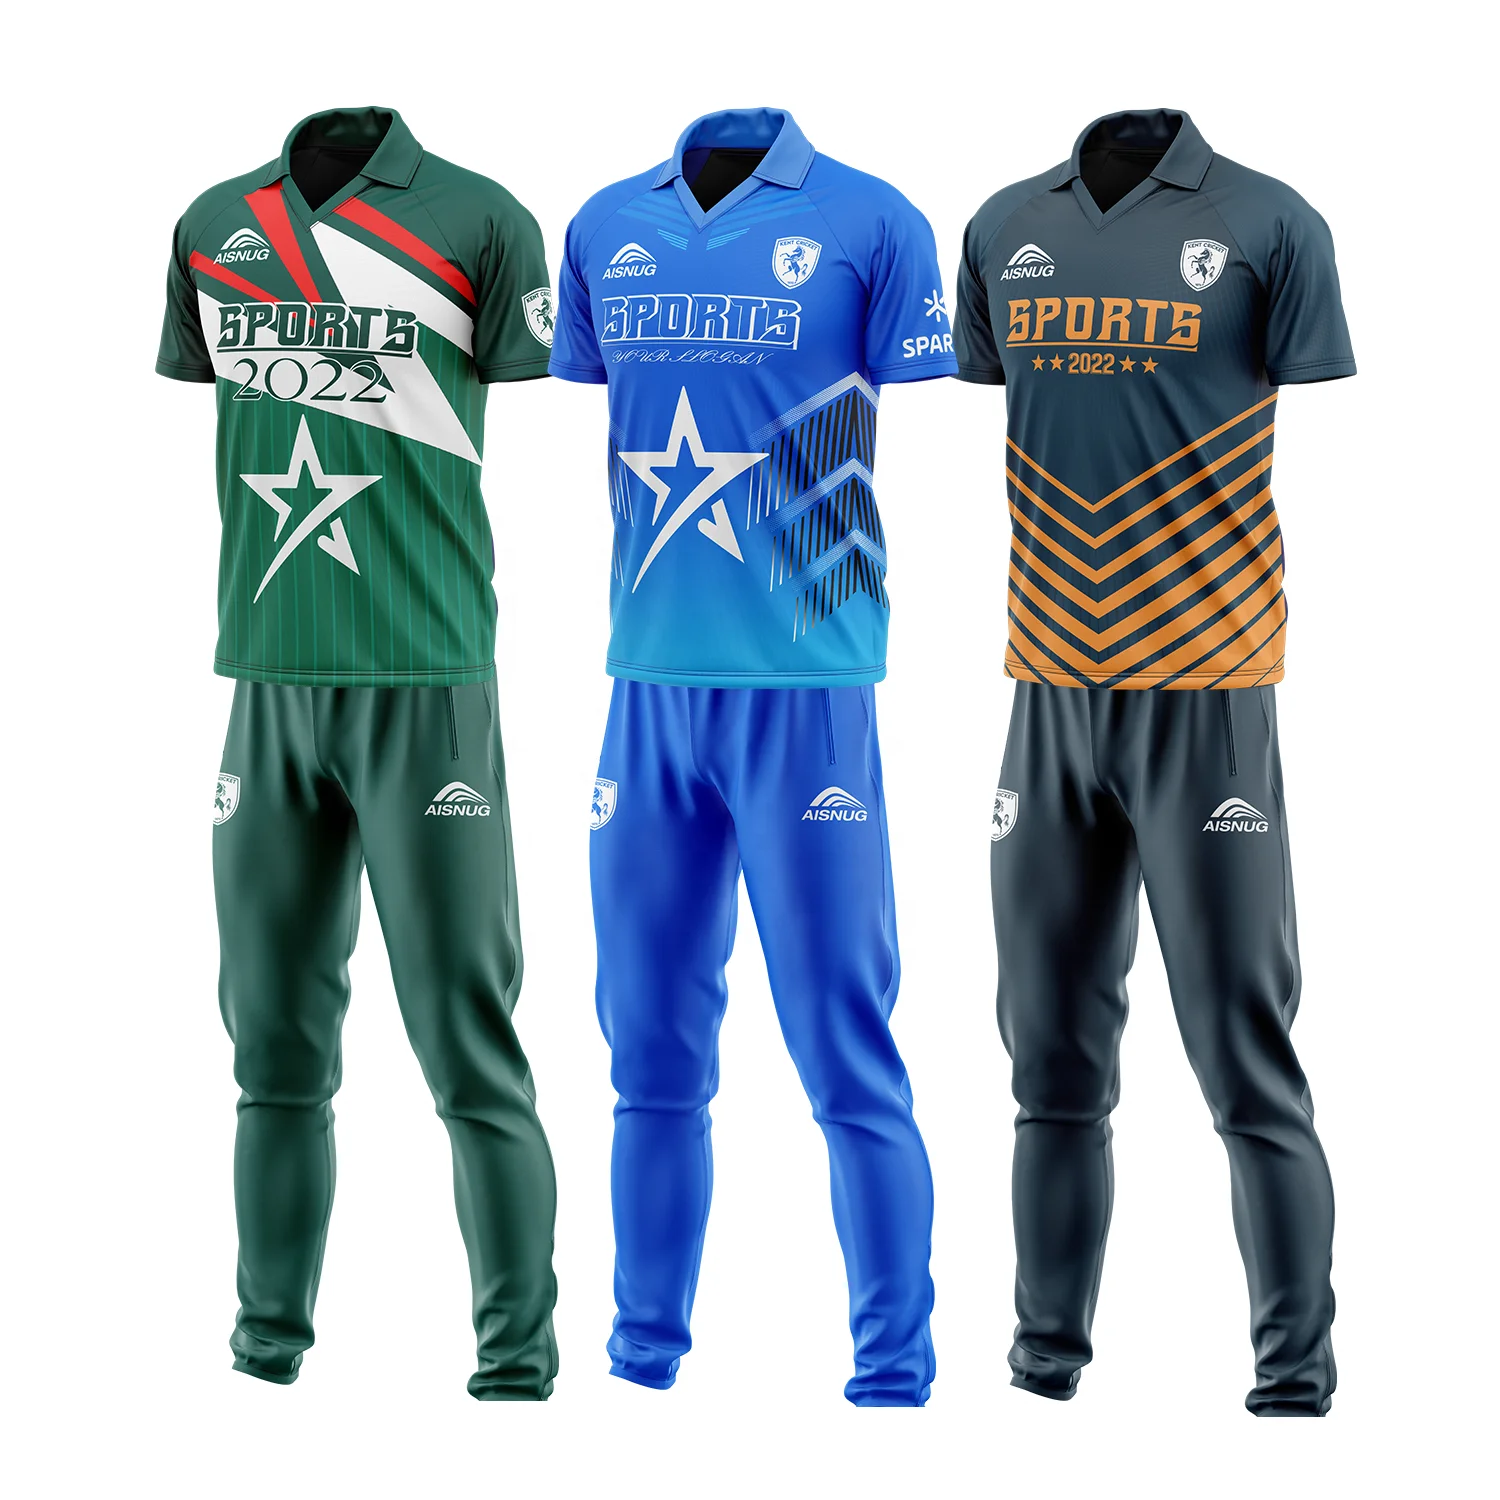 New Sublimation Cricket Jersey Design 2023 Stock Illustration 2291708921